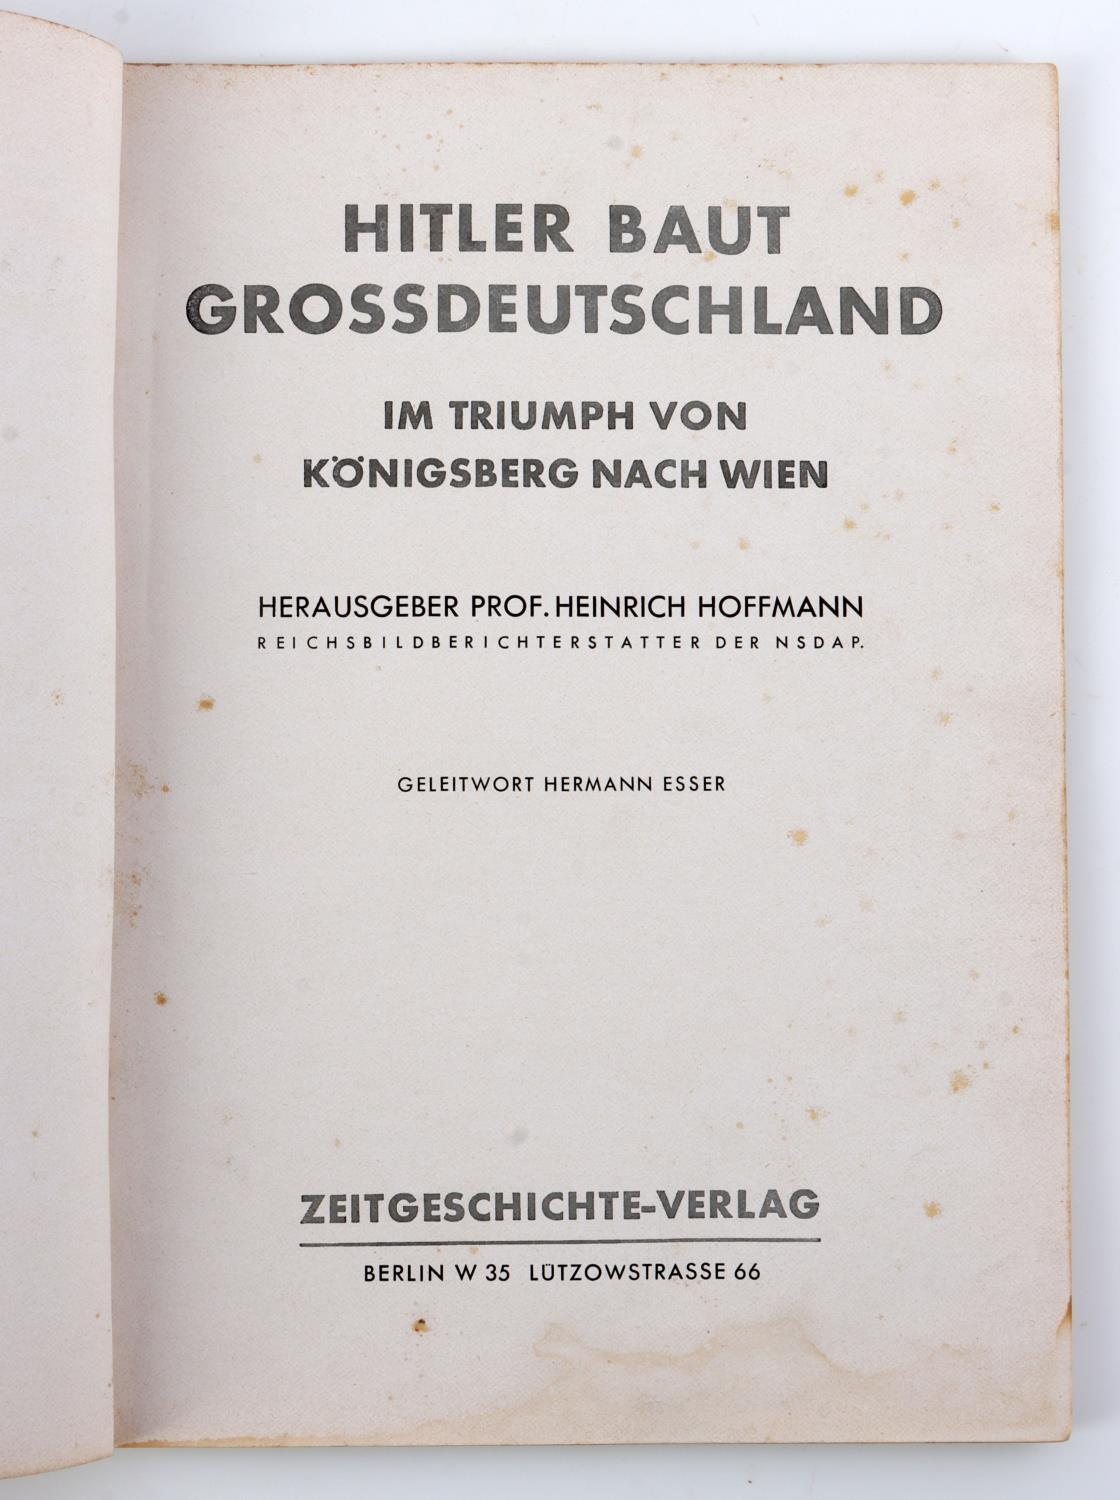 WWII GERMAN THIRD REICH BOOK LOT OF 3